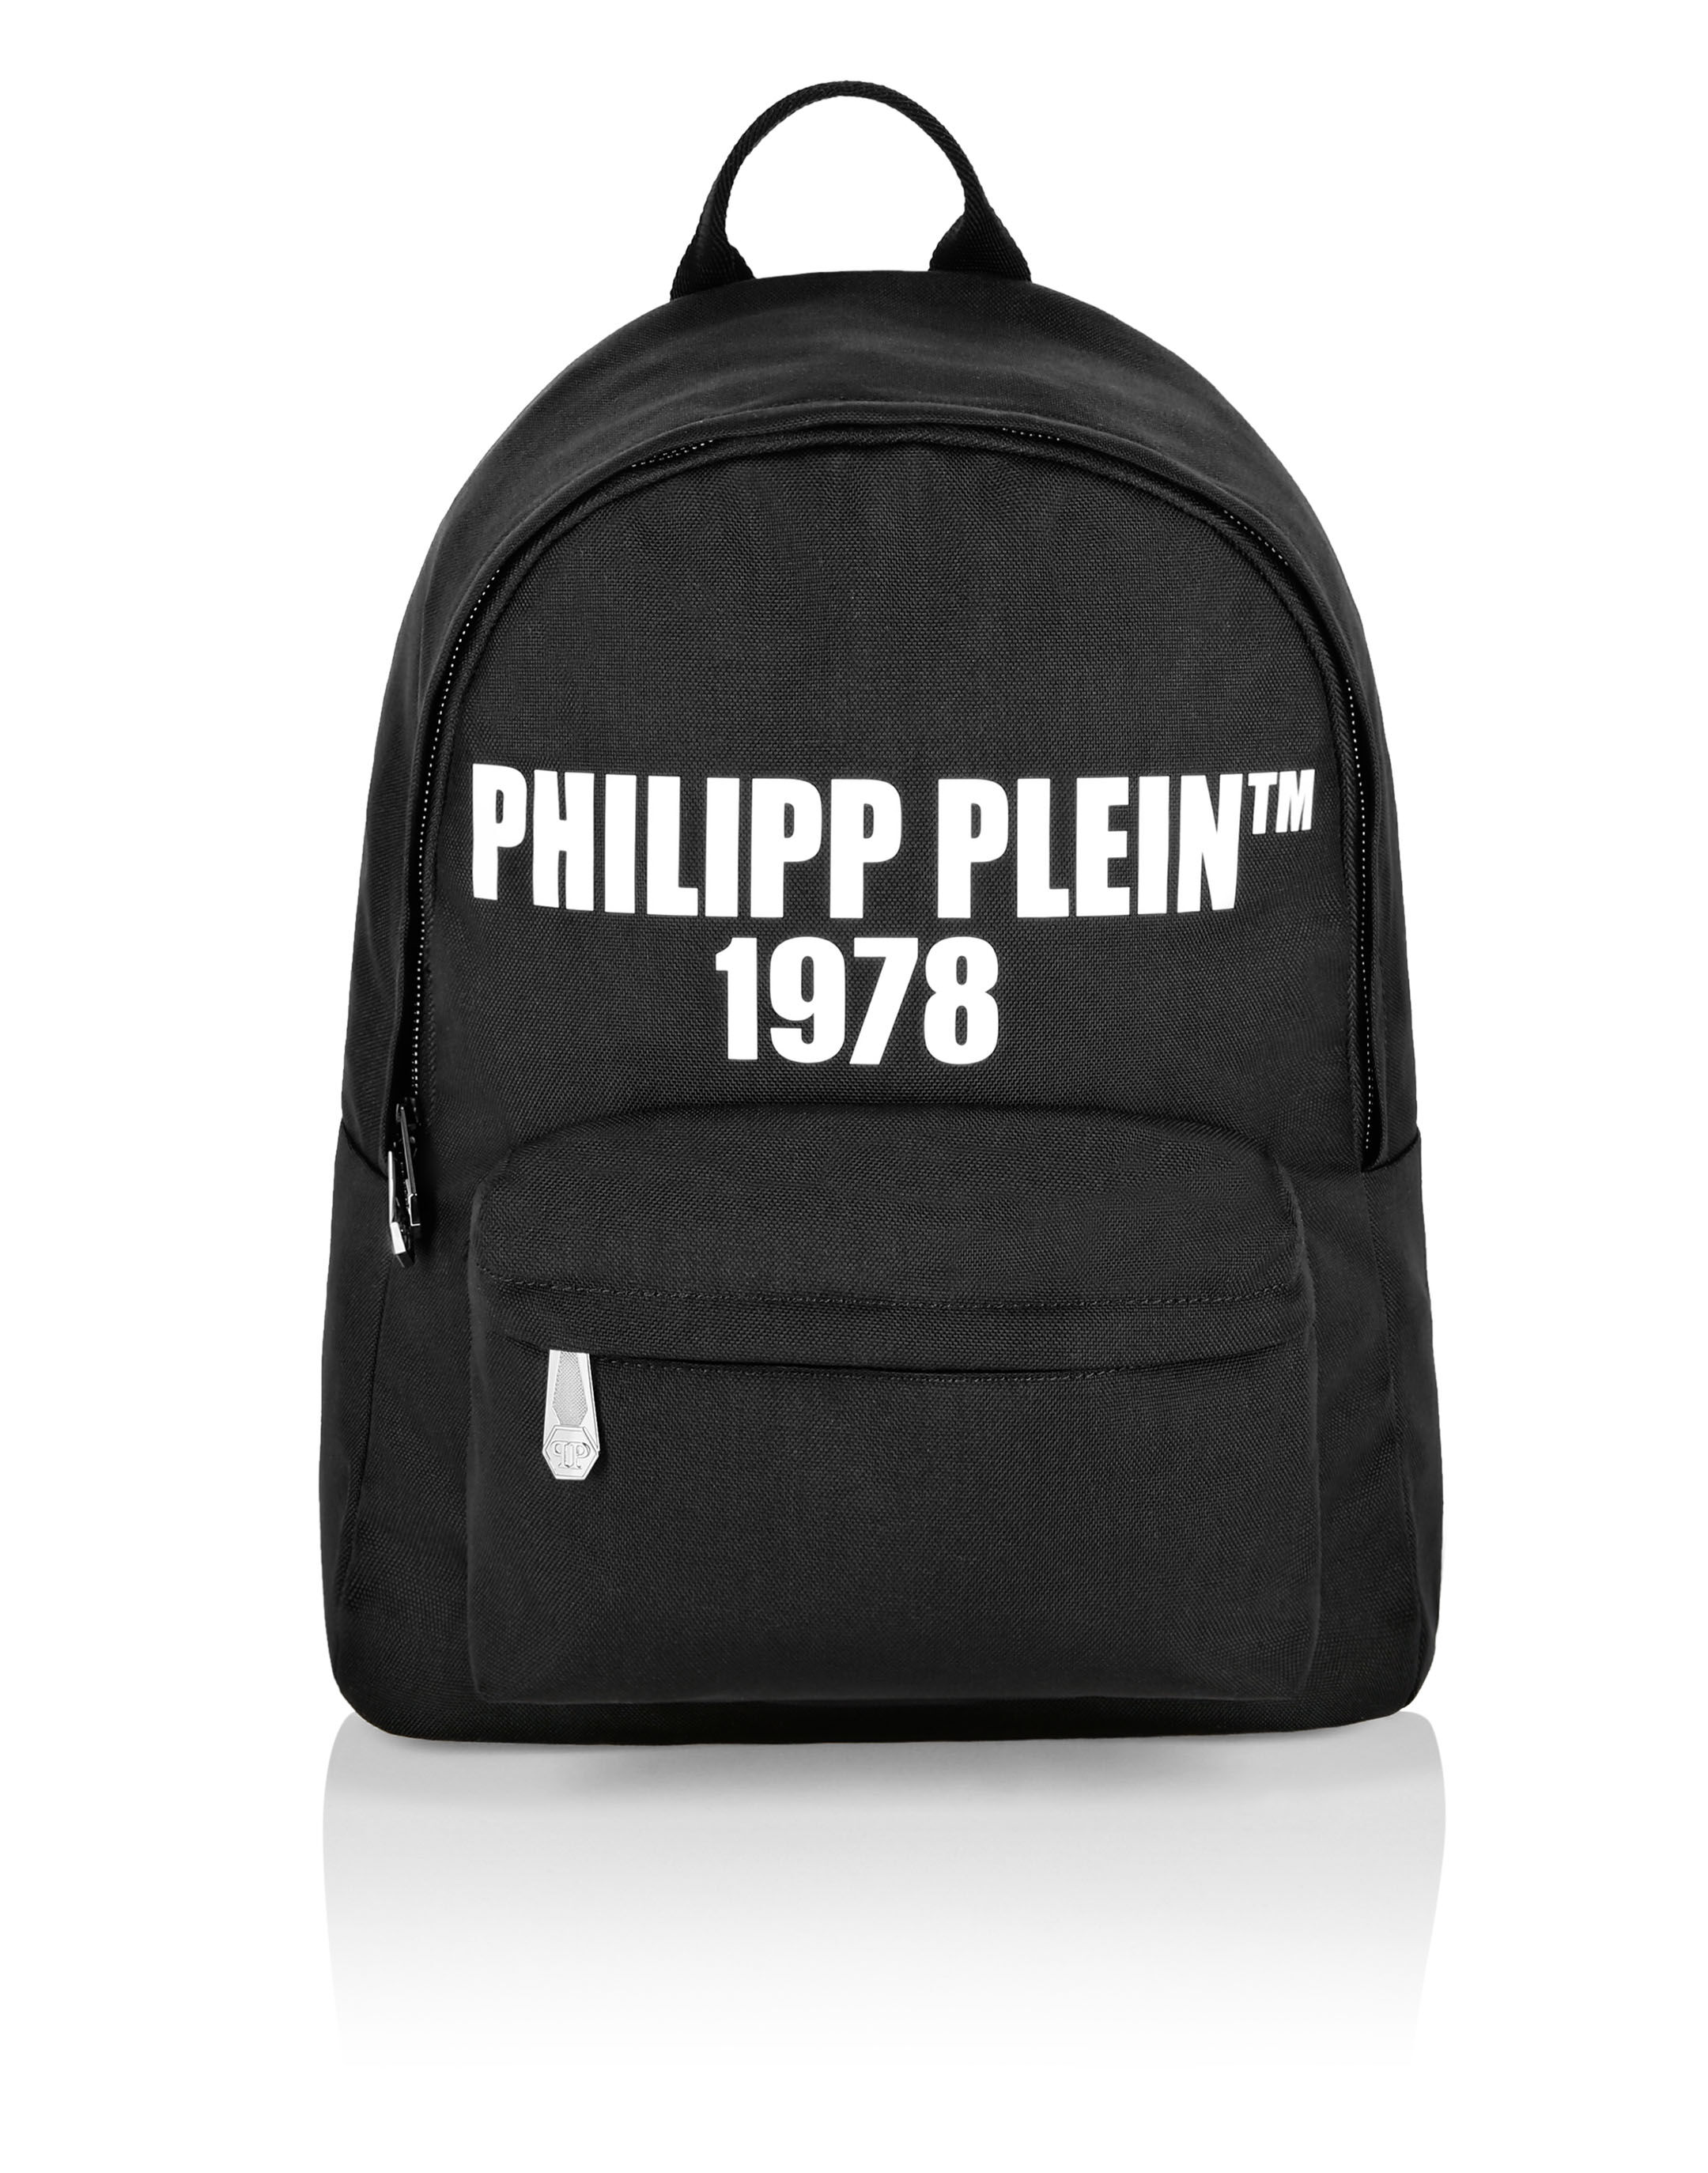 philipp plein bag price